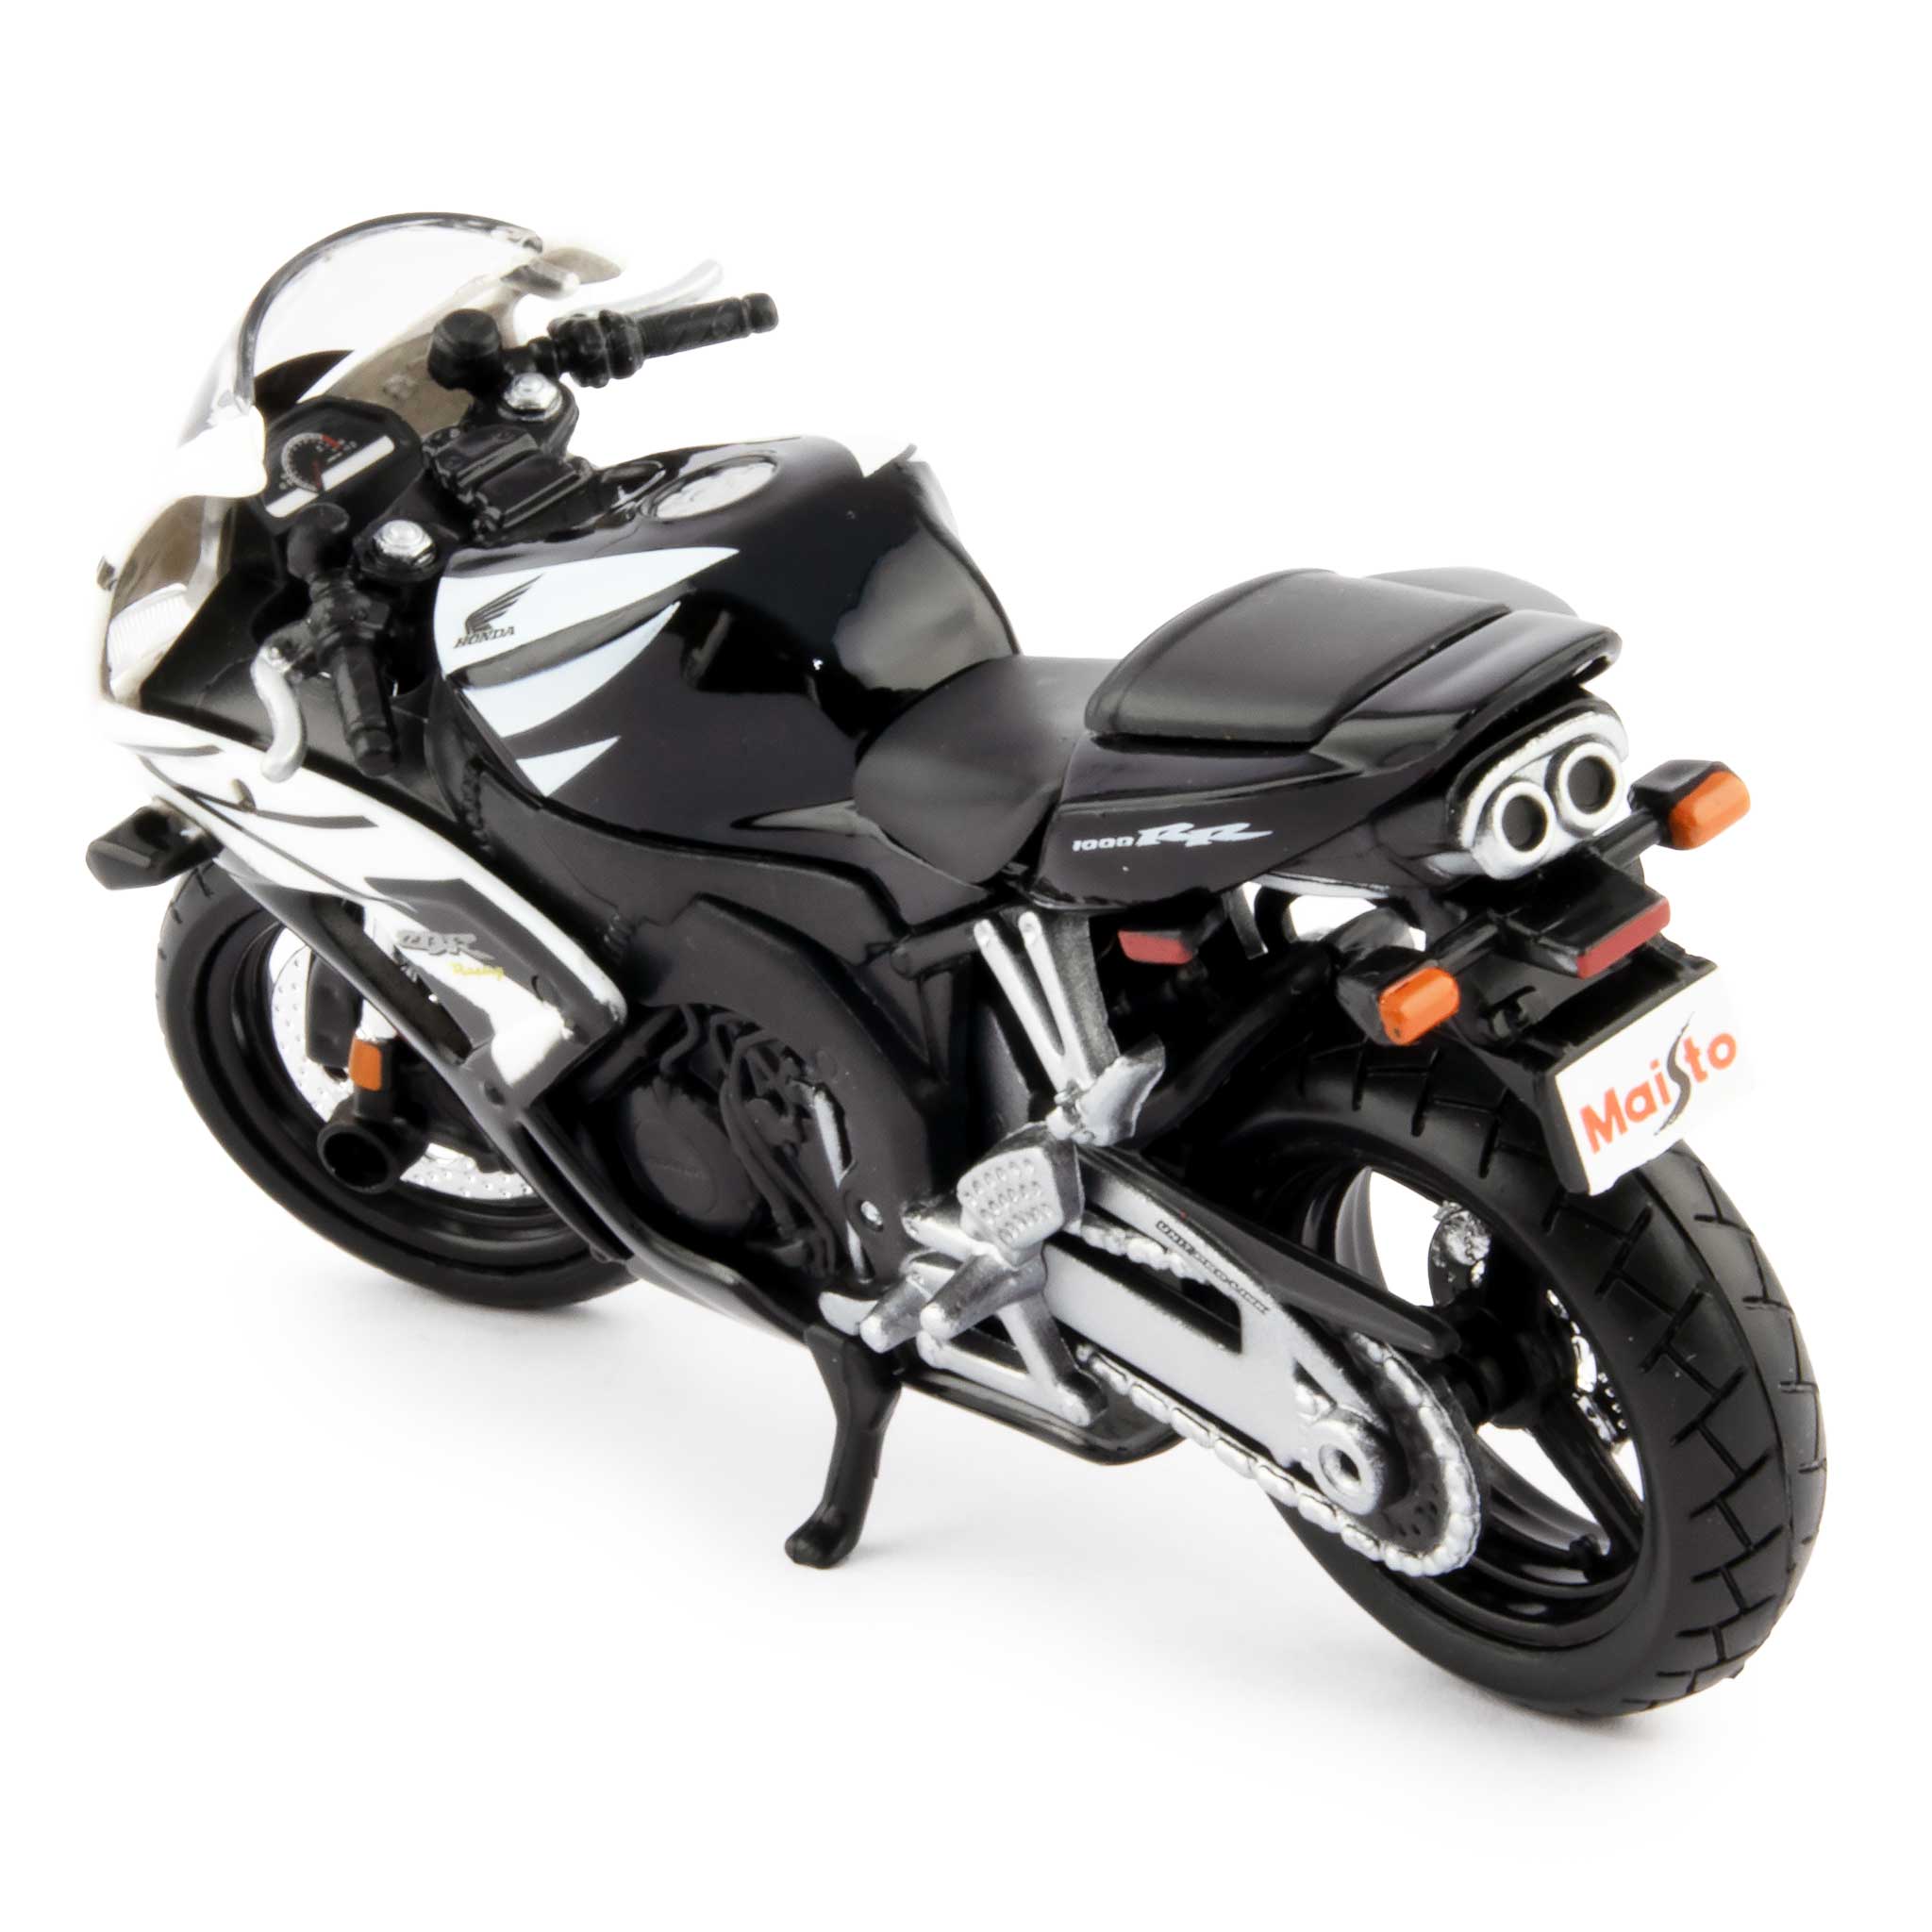 Honda CBR1000RR Diecast Model Motorcycle black/white - 1:18 scale-Maisto-Diecast Model Centre